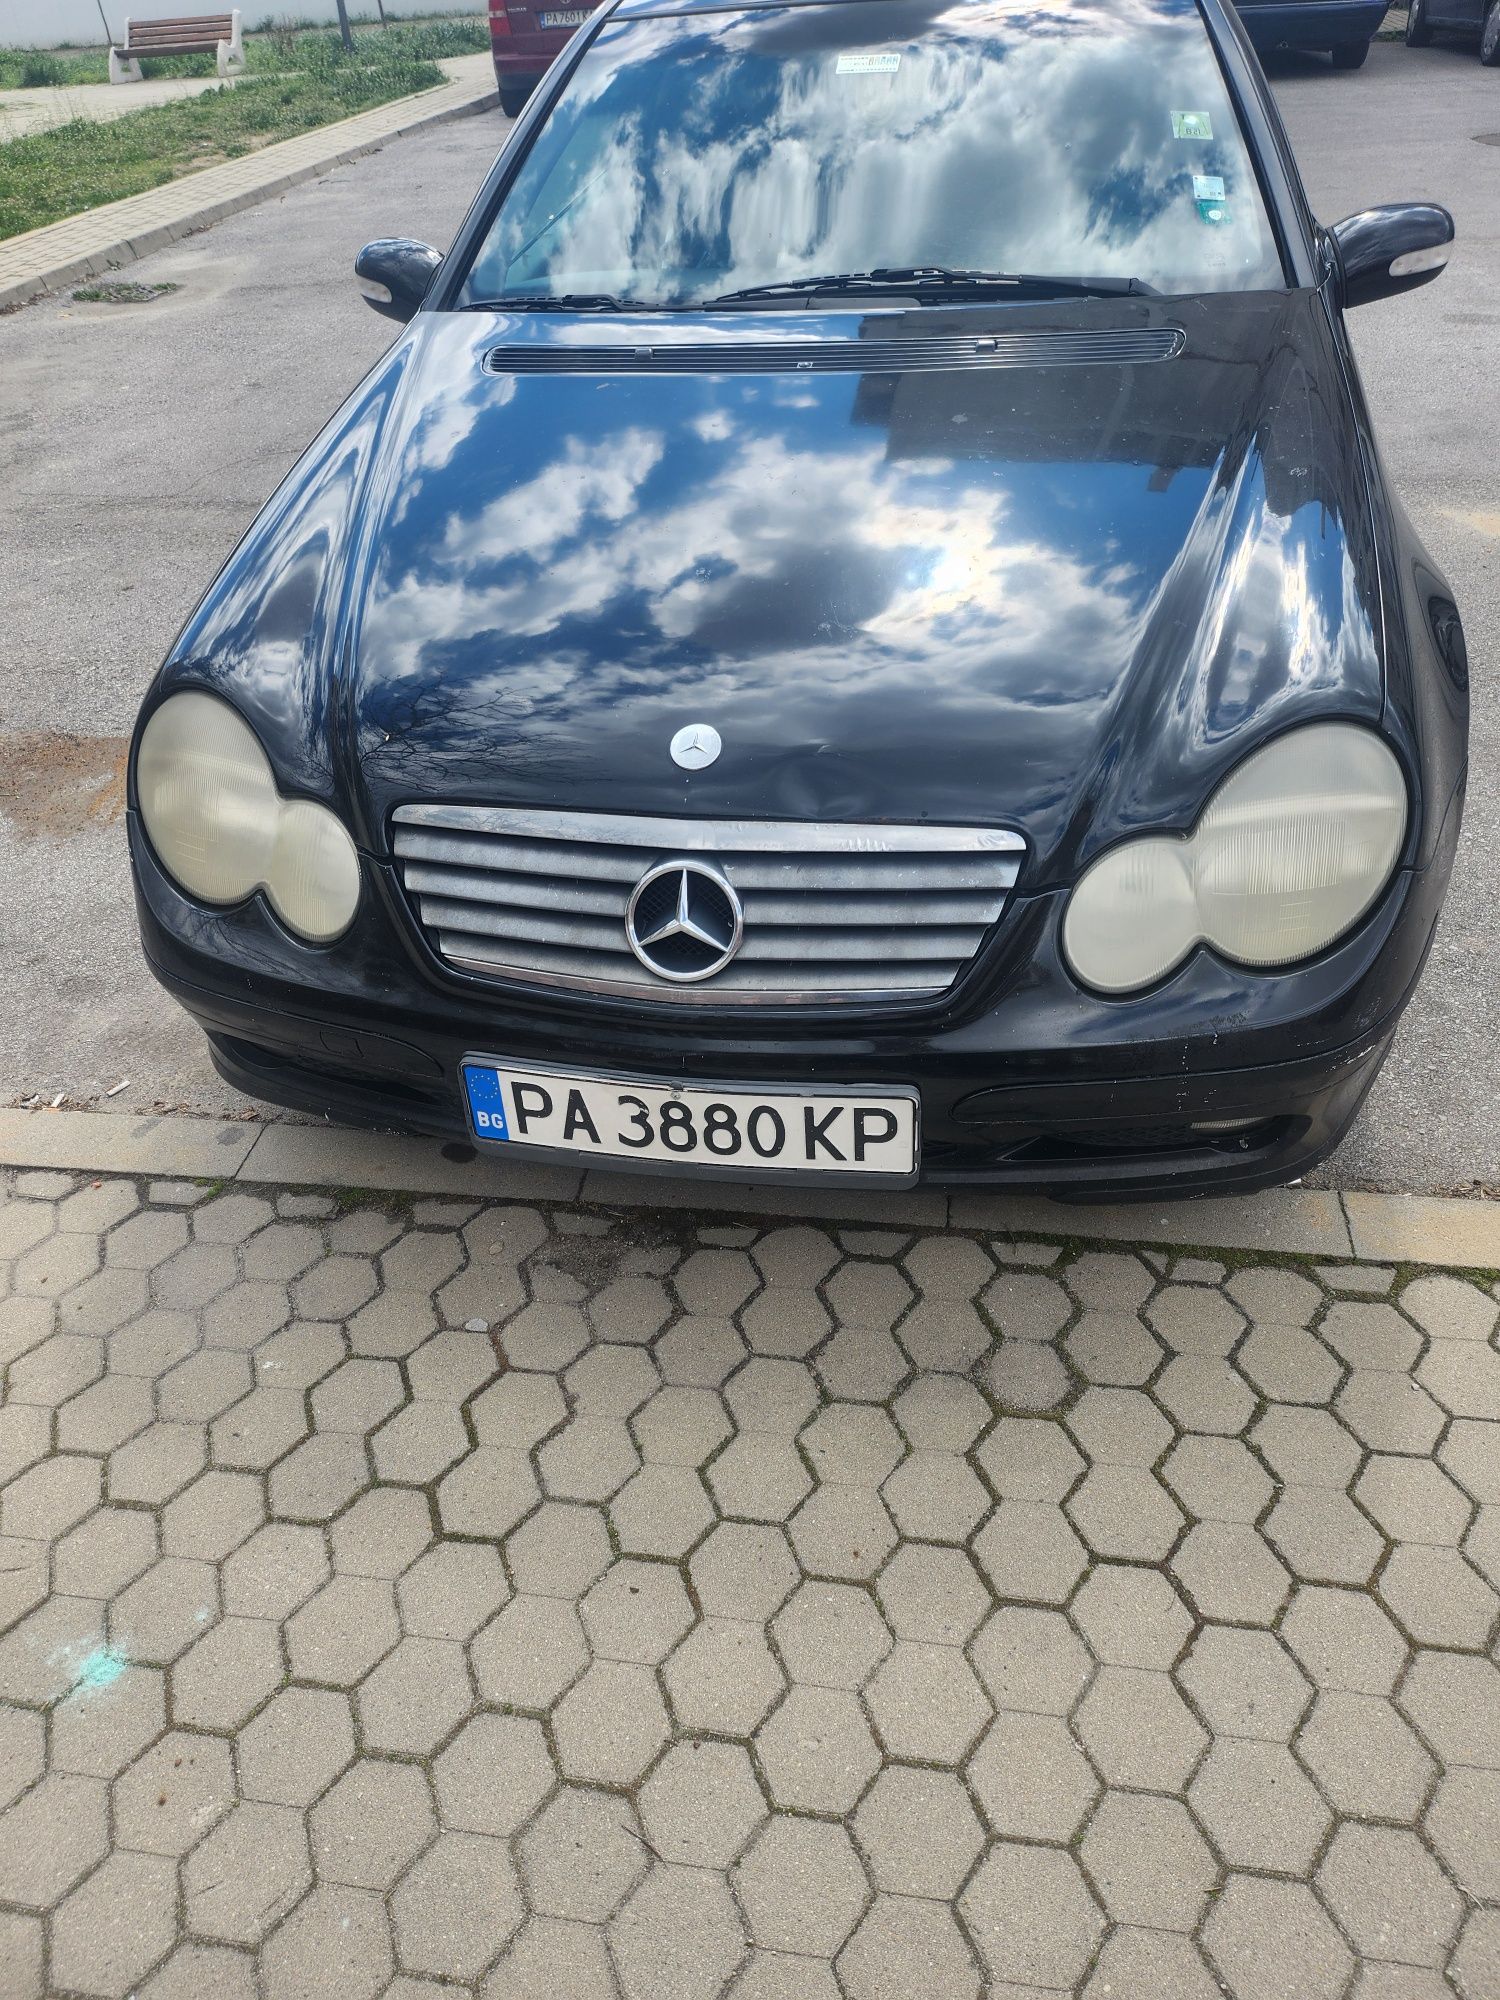 Mercedes c320, coupe, sport edition